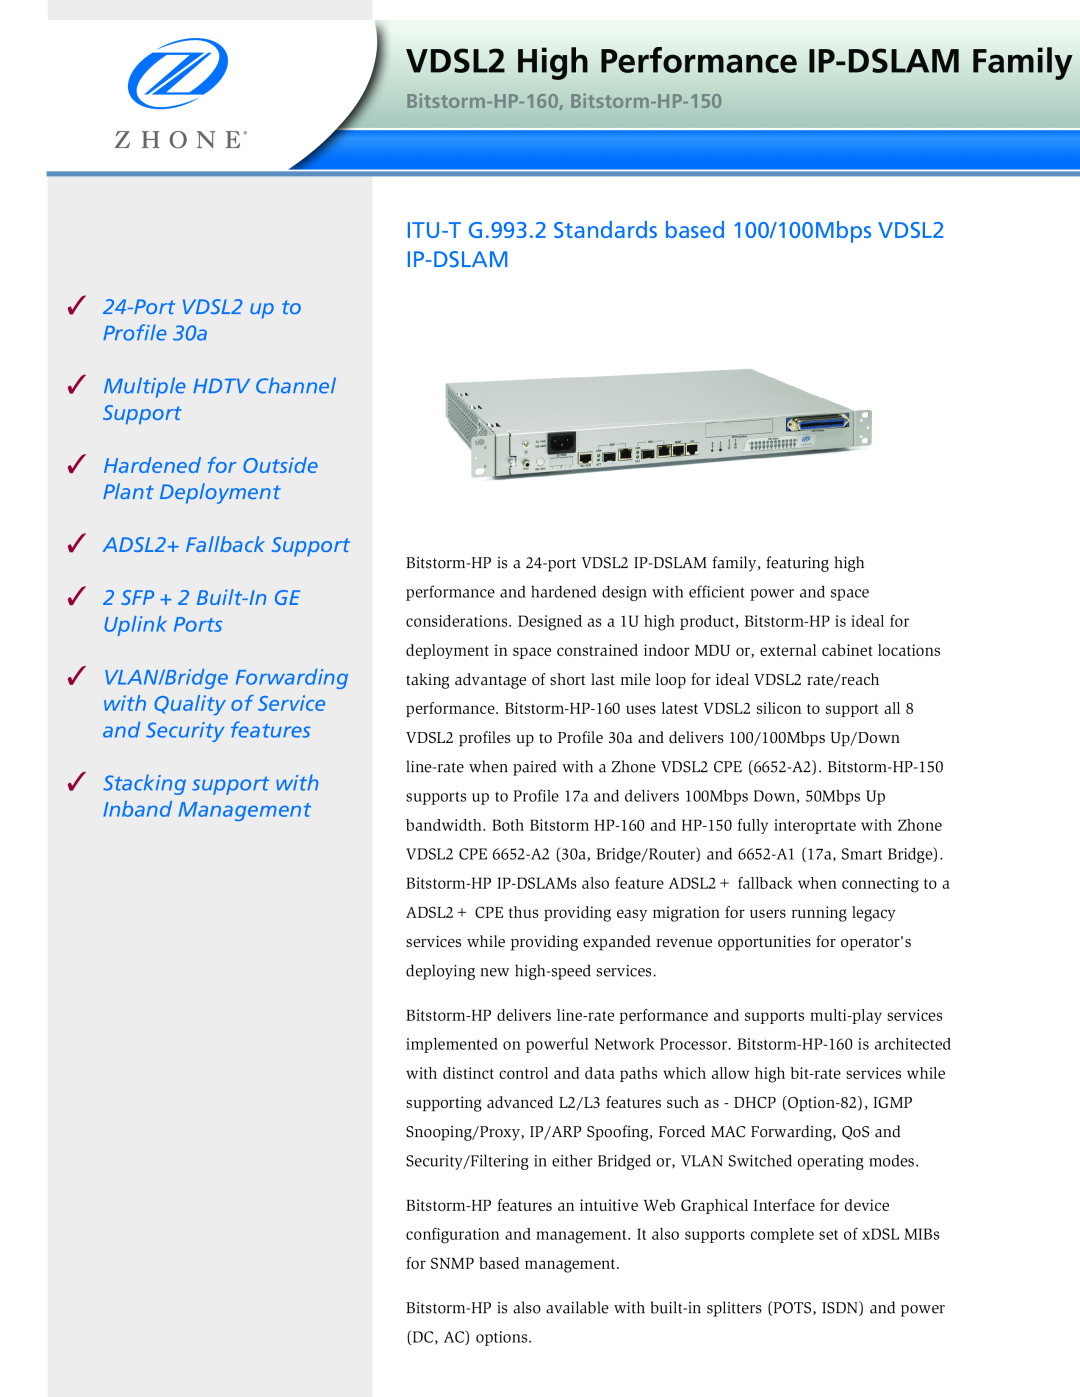 Zhone Technologies HP-160, HP-150 manual VDSL2 High Performance IP-DSLAM Family, SFP + 2 Built-In GE Uplink Ports 